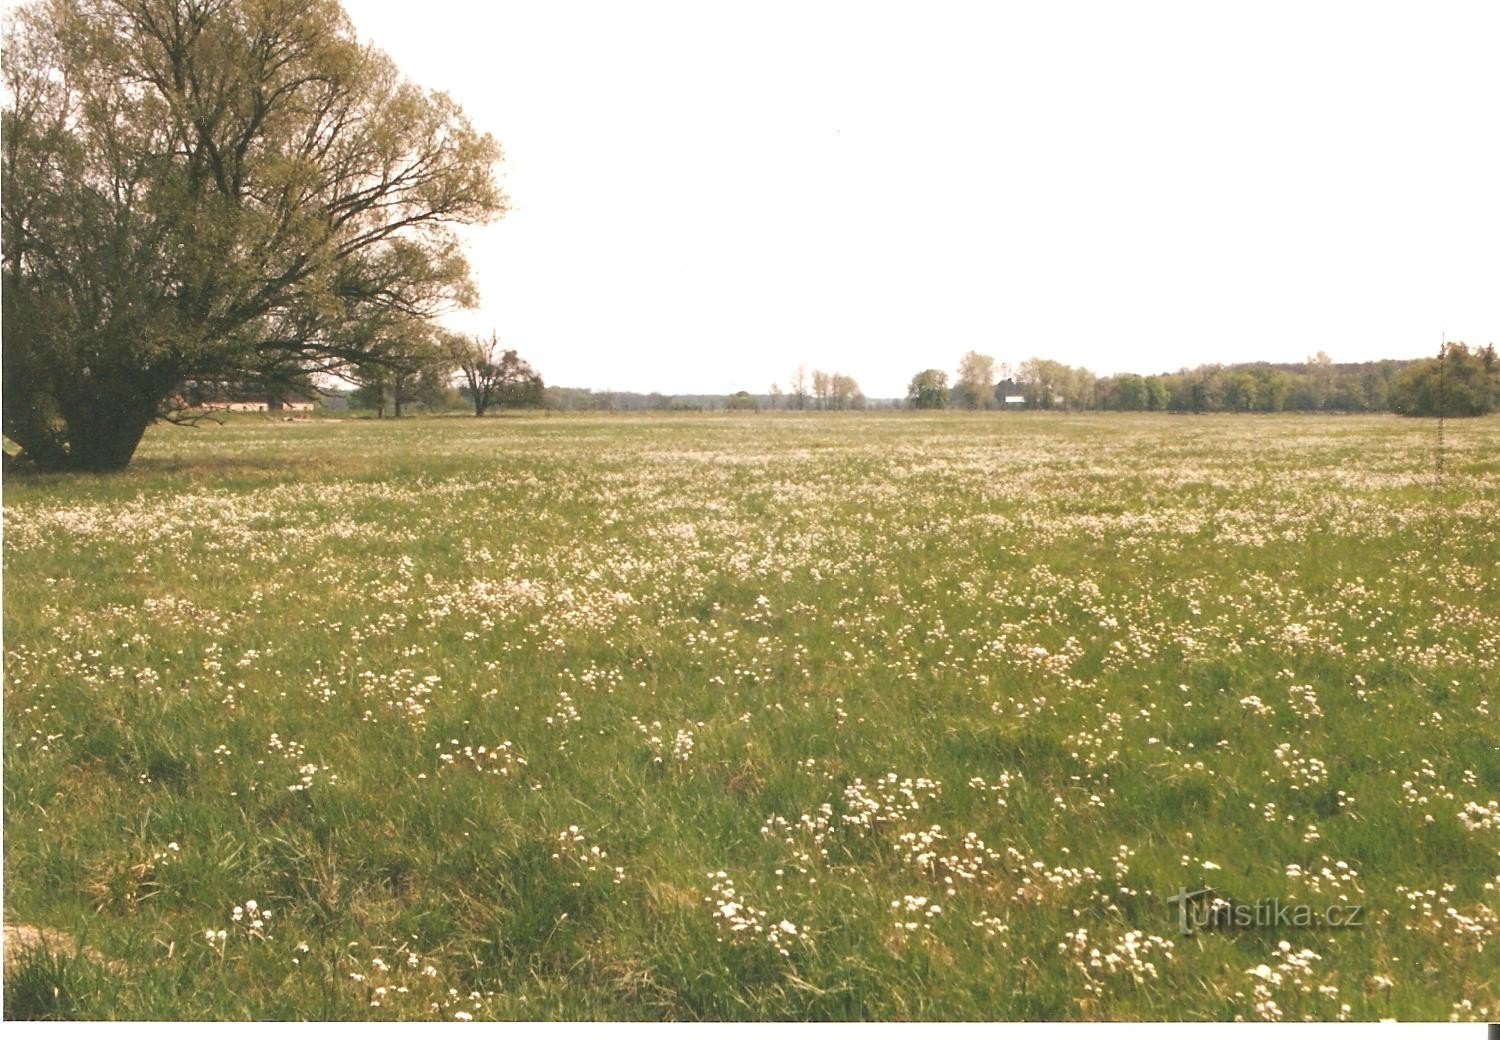 Lansk meadows in spring